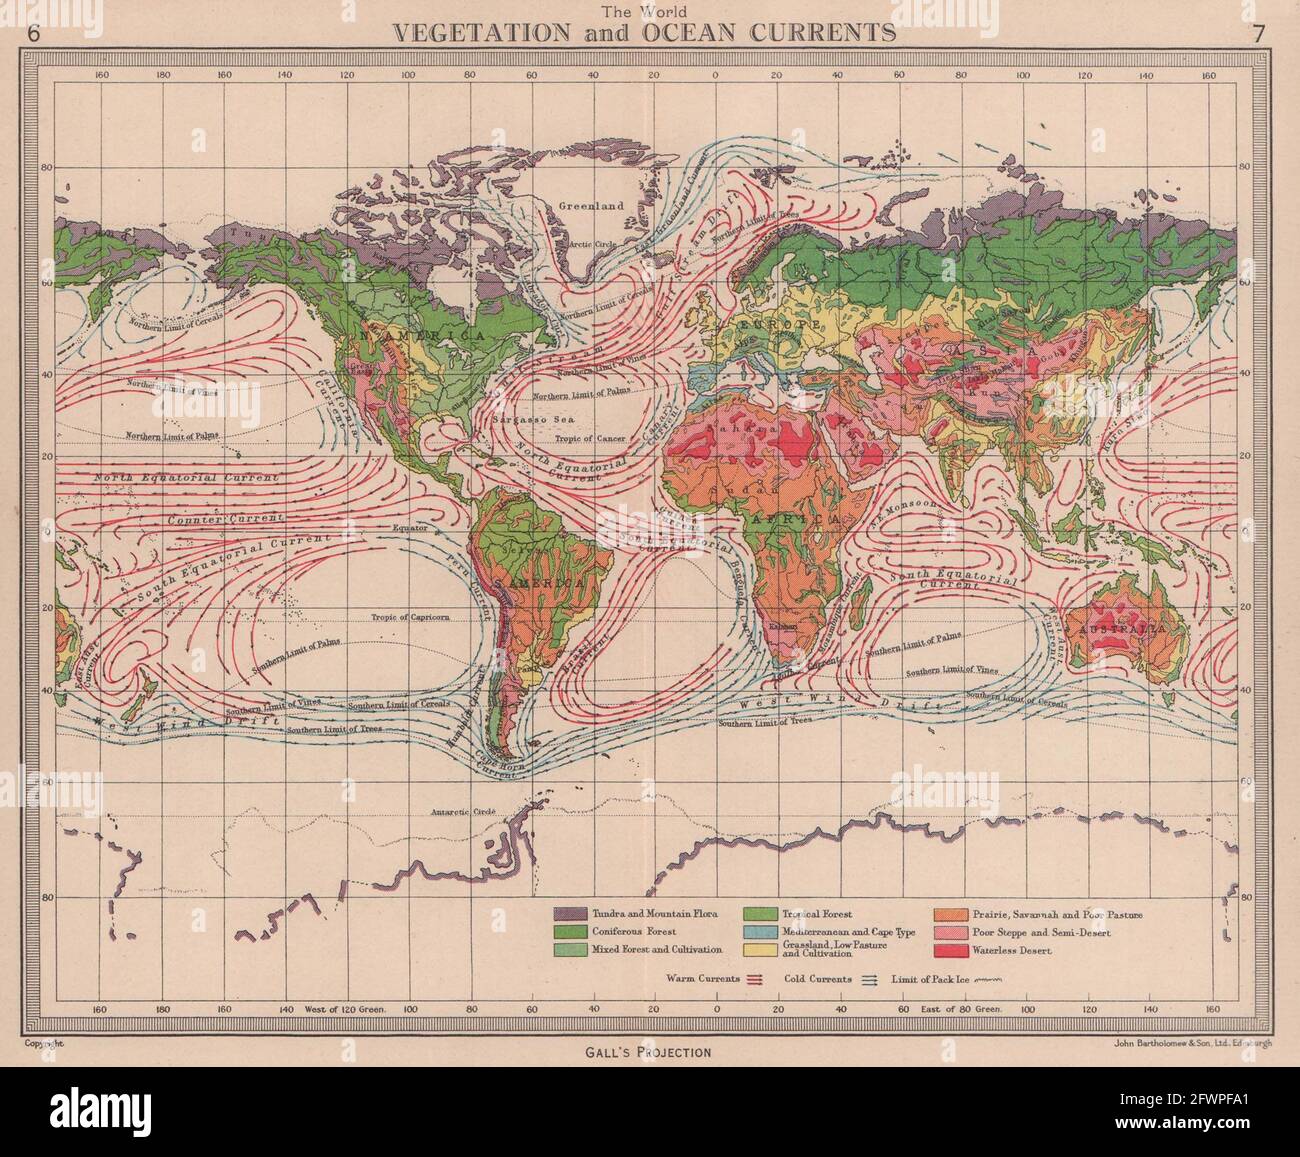 World - Vegetation & Ocean Currents. BARTHOLOMEW 1949 old vintage map chart Stock Photo